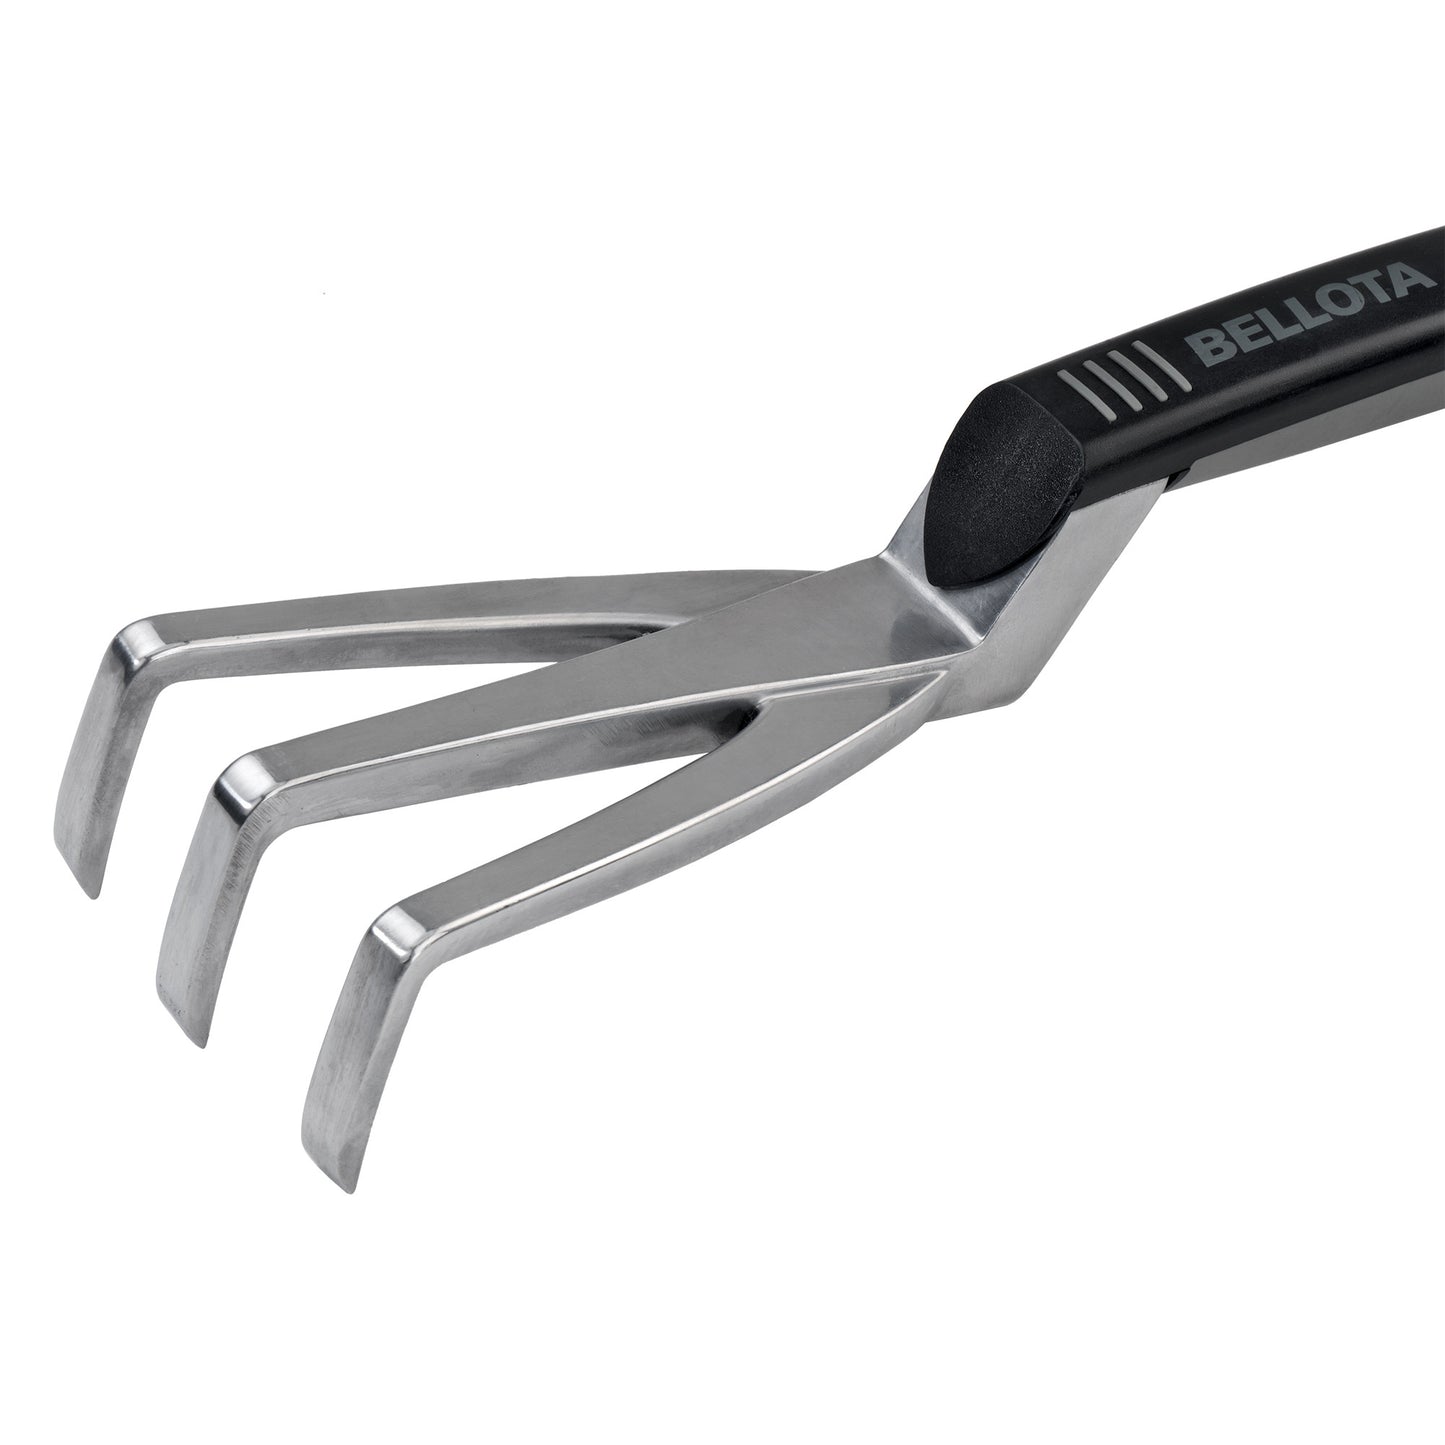 Kit de herramientas mango corto de aluminio Bellota 3076 BELLOTA - 3